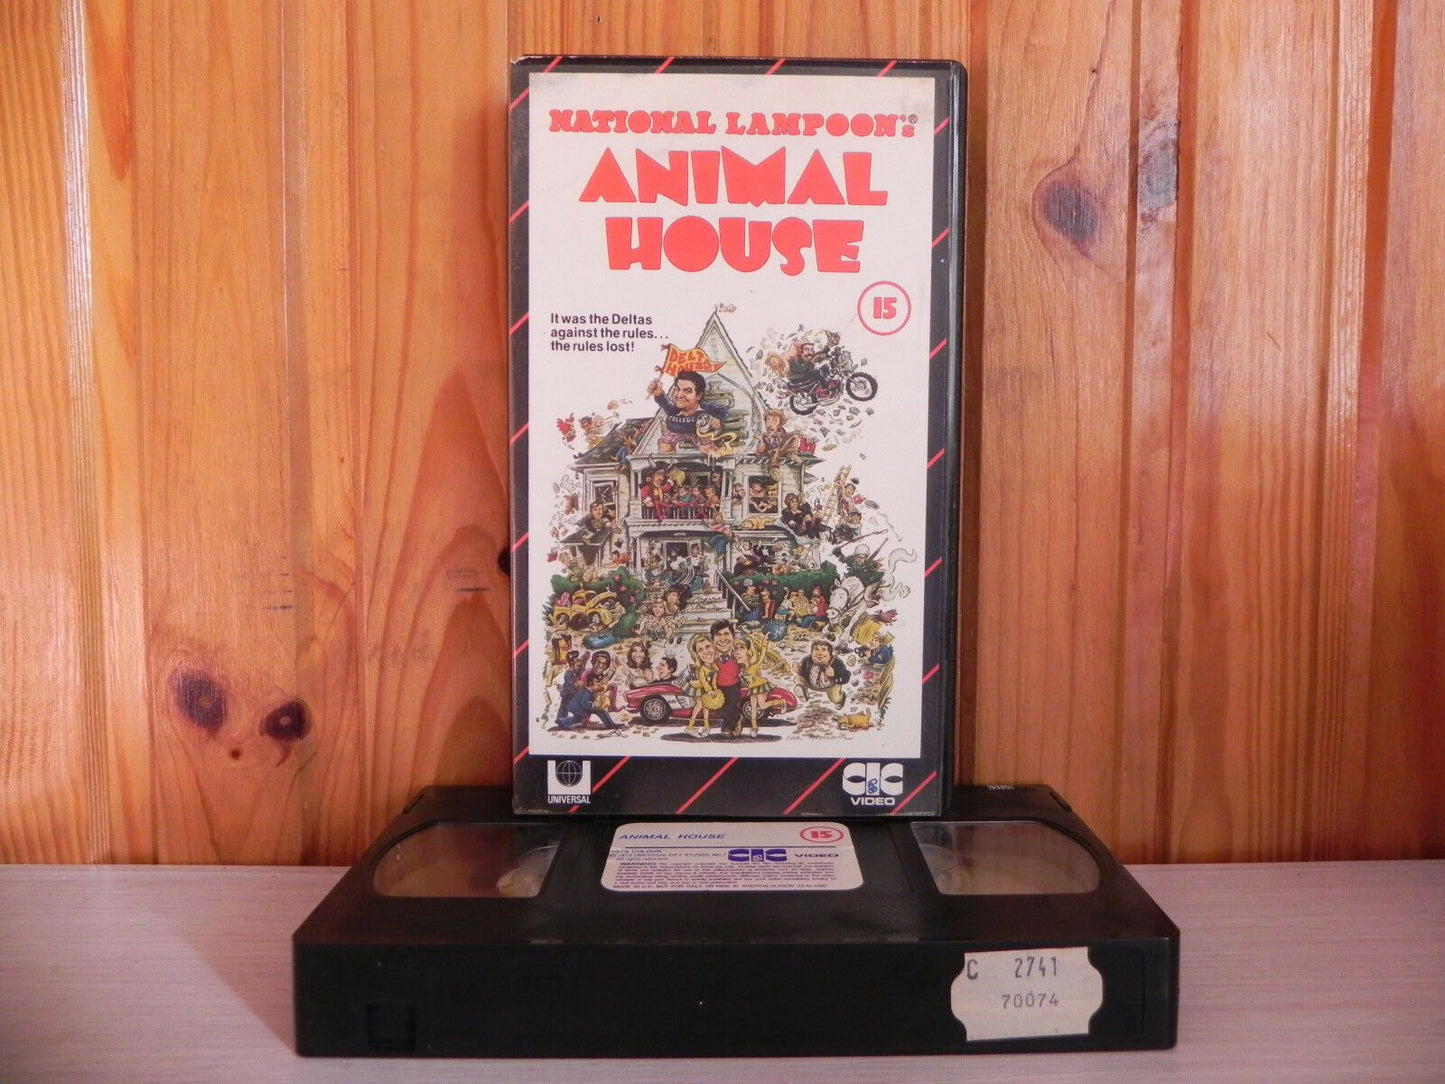 ANIMAL HOUSE - 1st CIC Release - National Lampoon - Pre-Cert - John Belushi VHS-